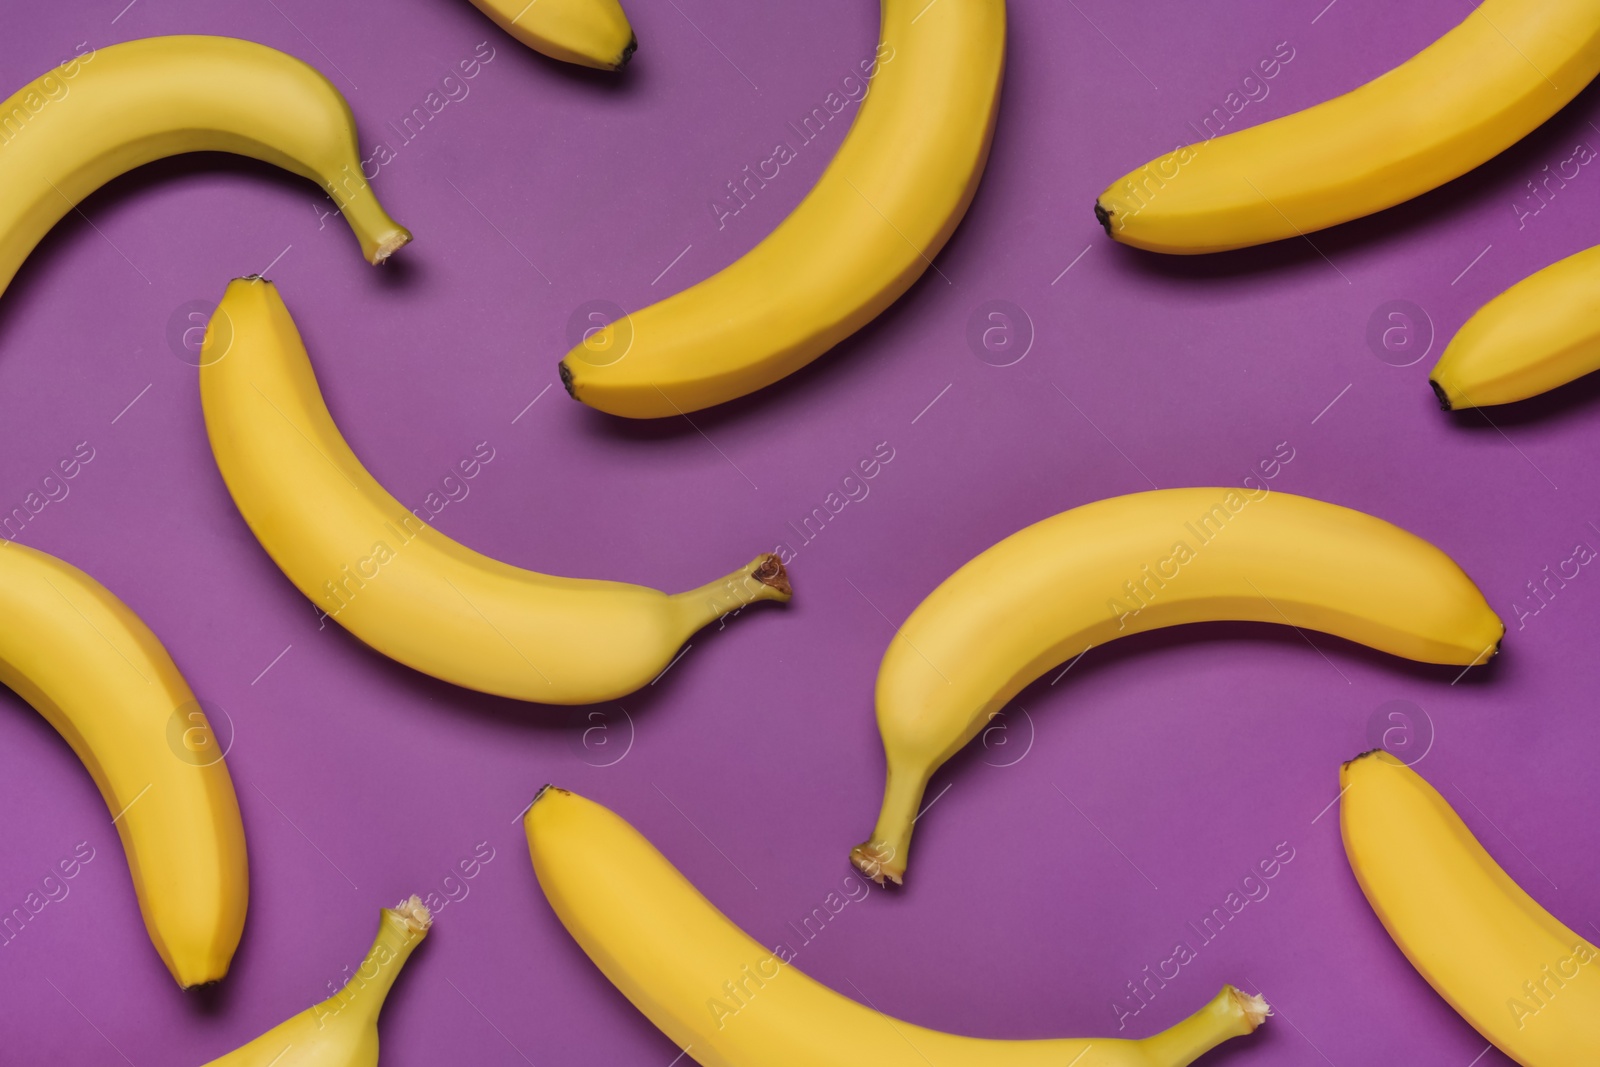 Photo of Ripe yellow bananas on purple background, flat lay